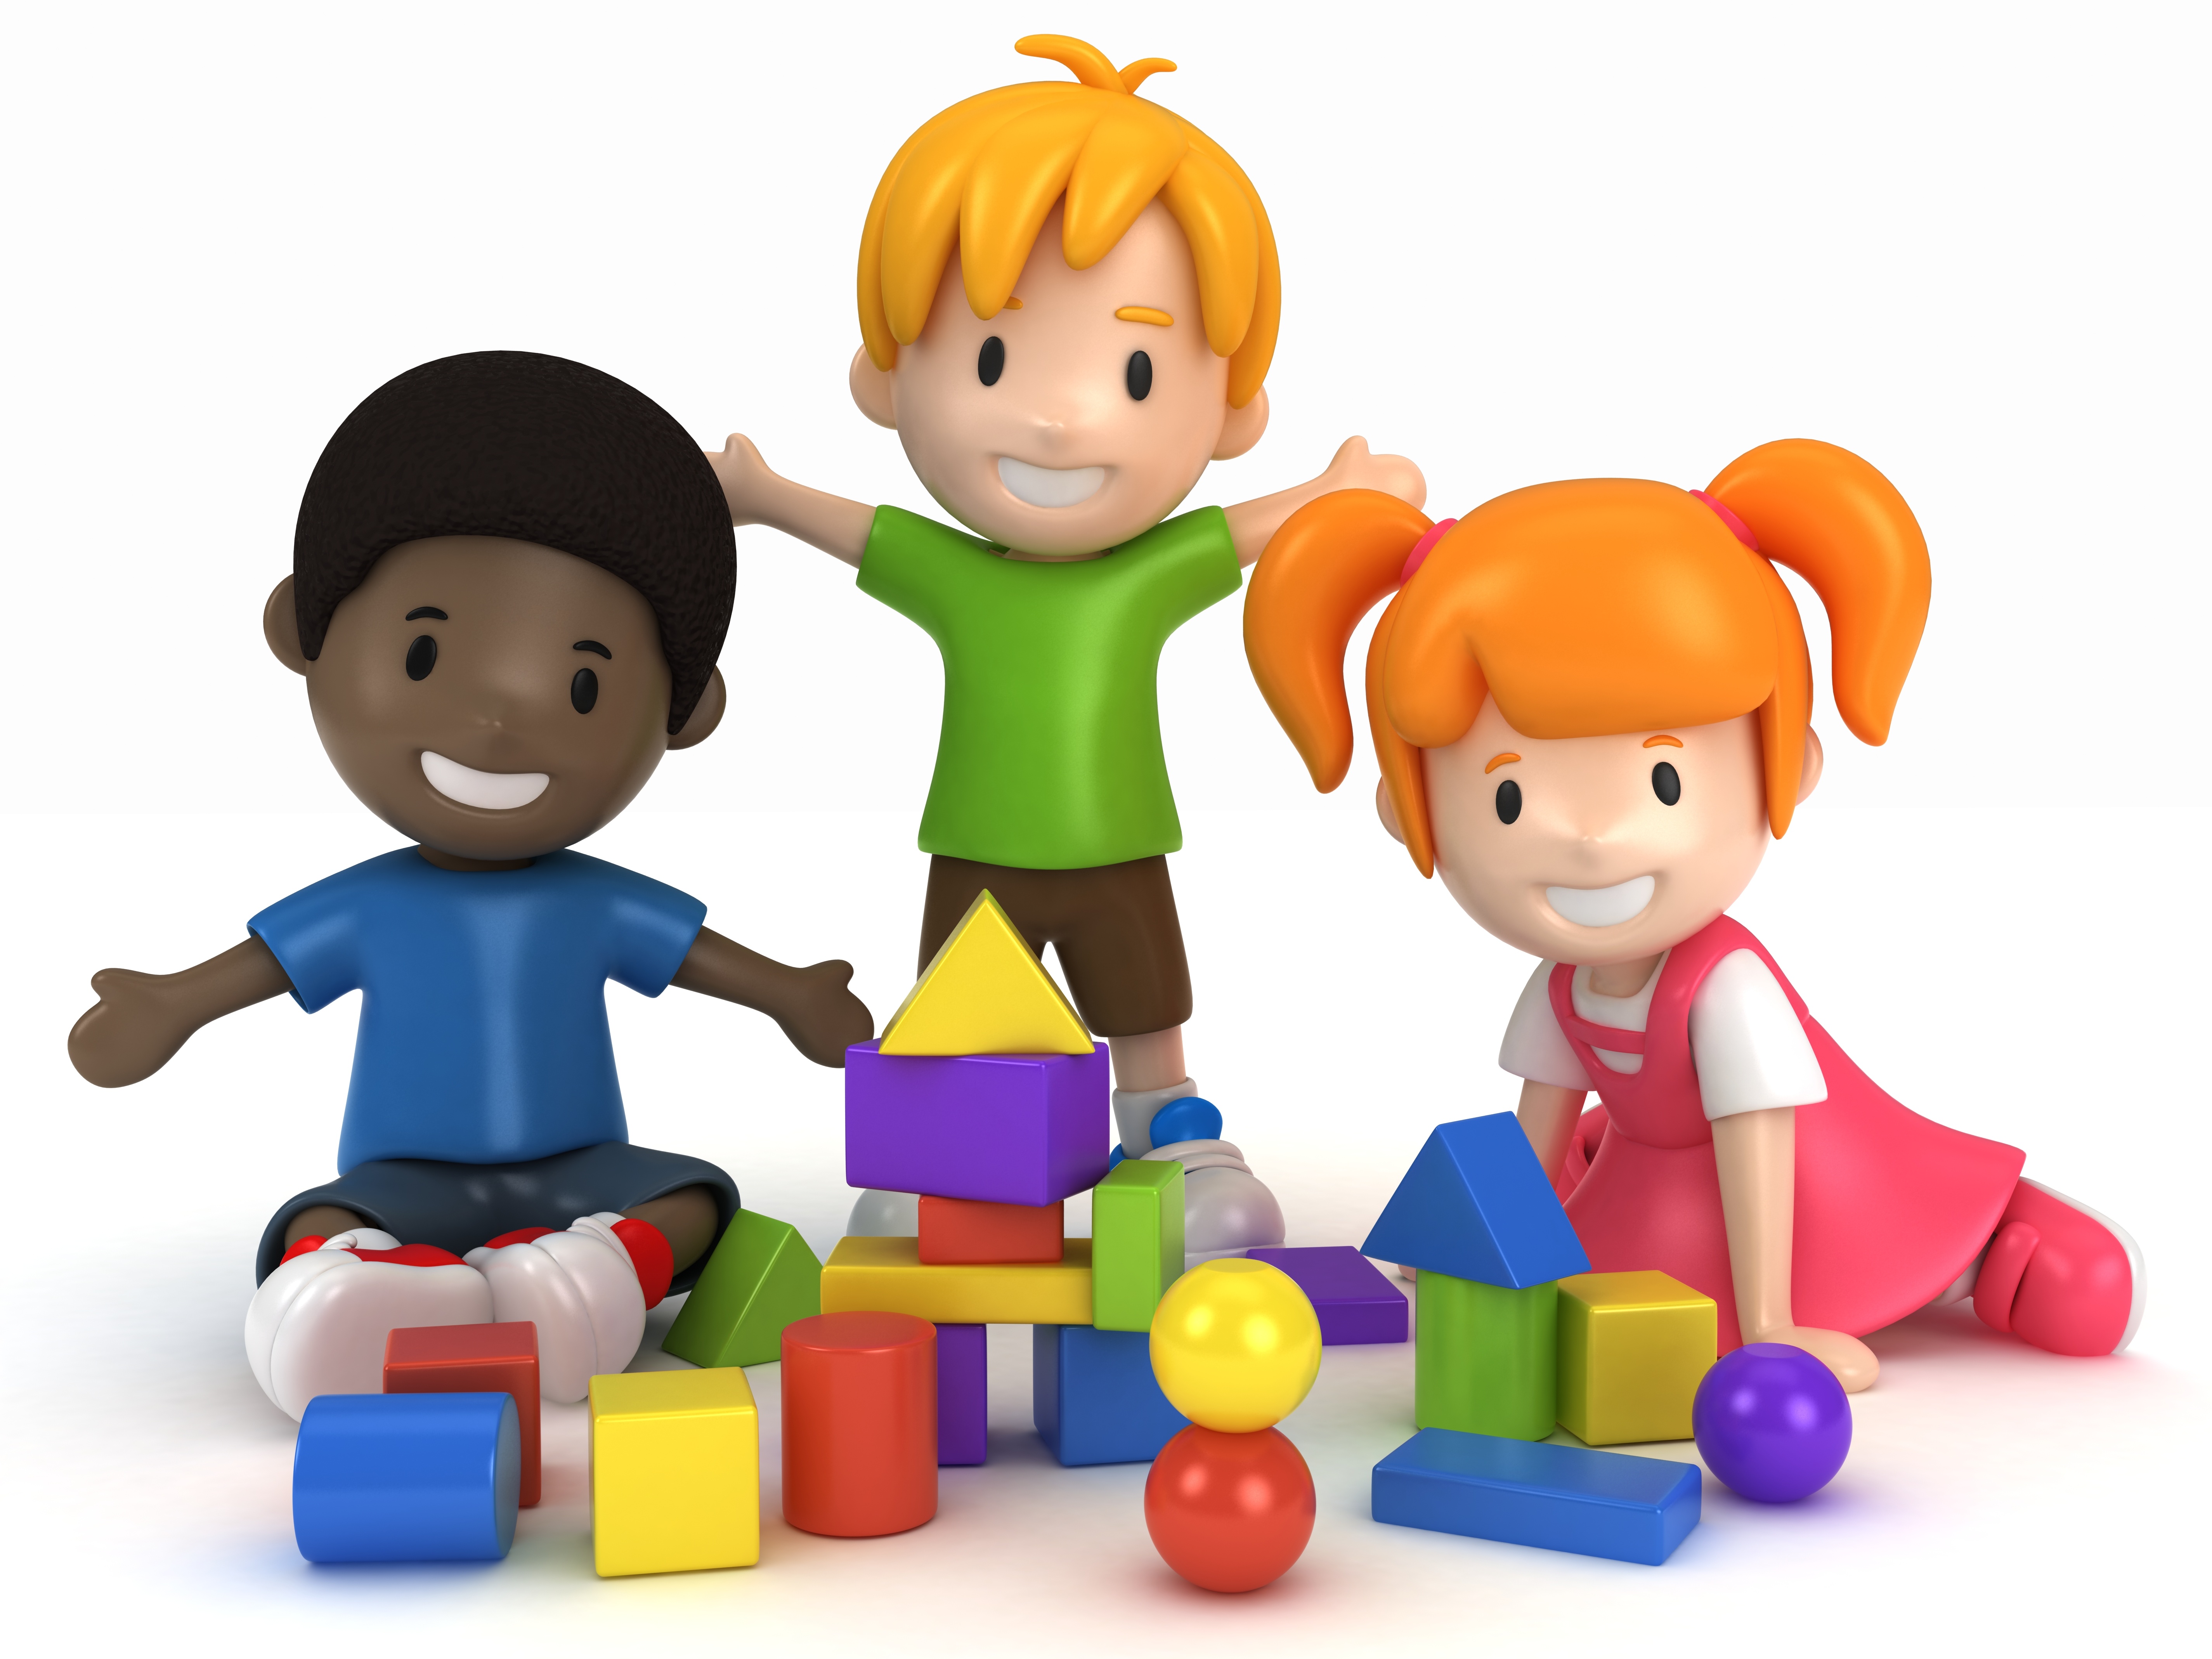 3d Render Of Kids Playing Building Blocks